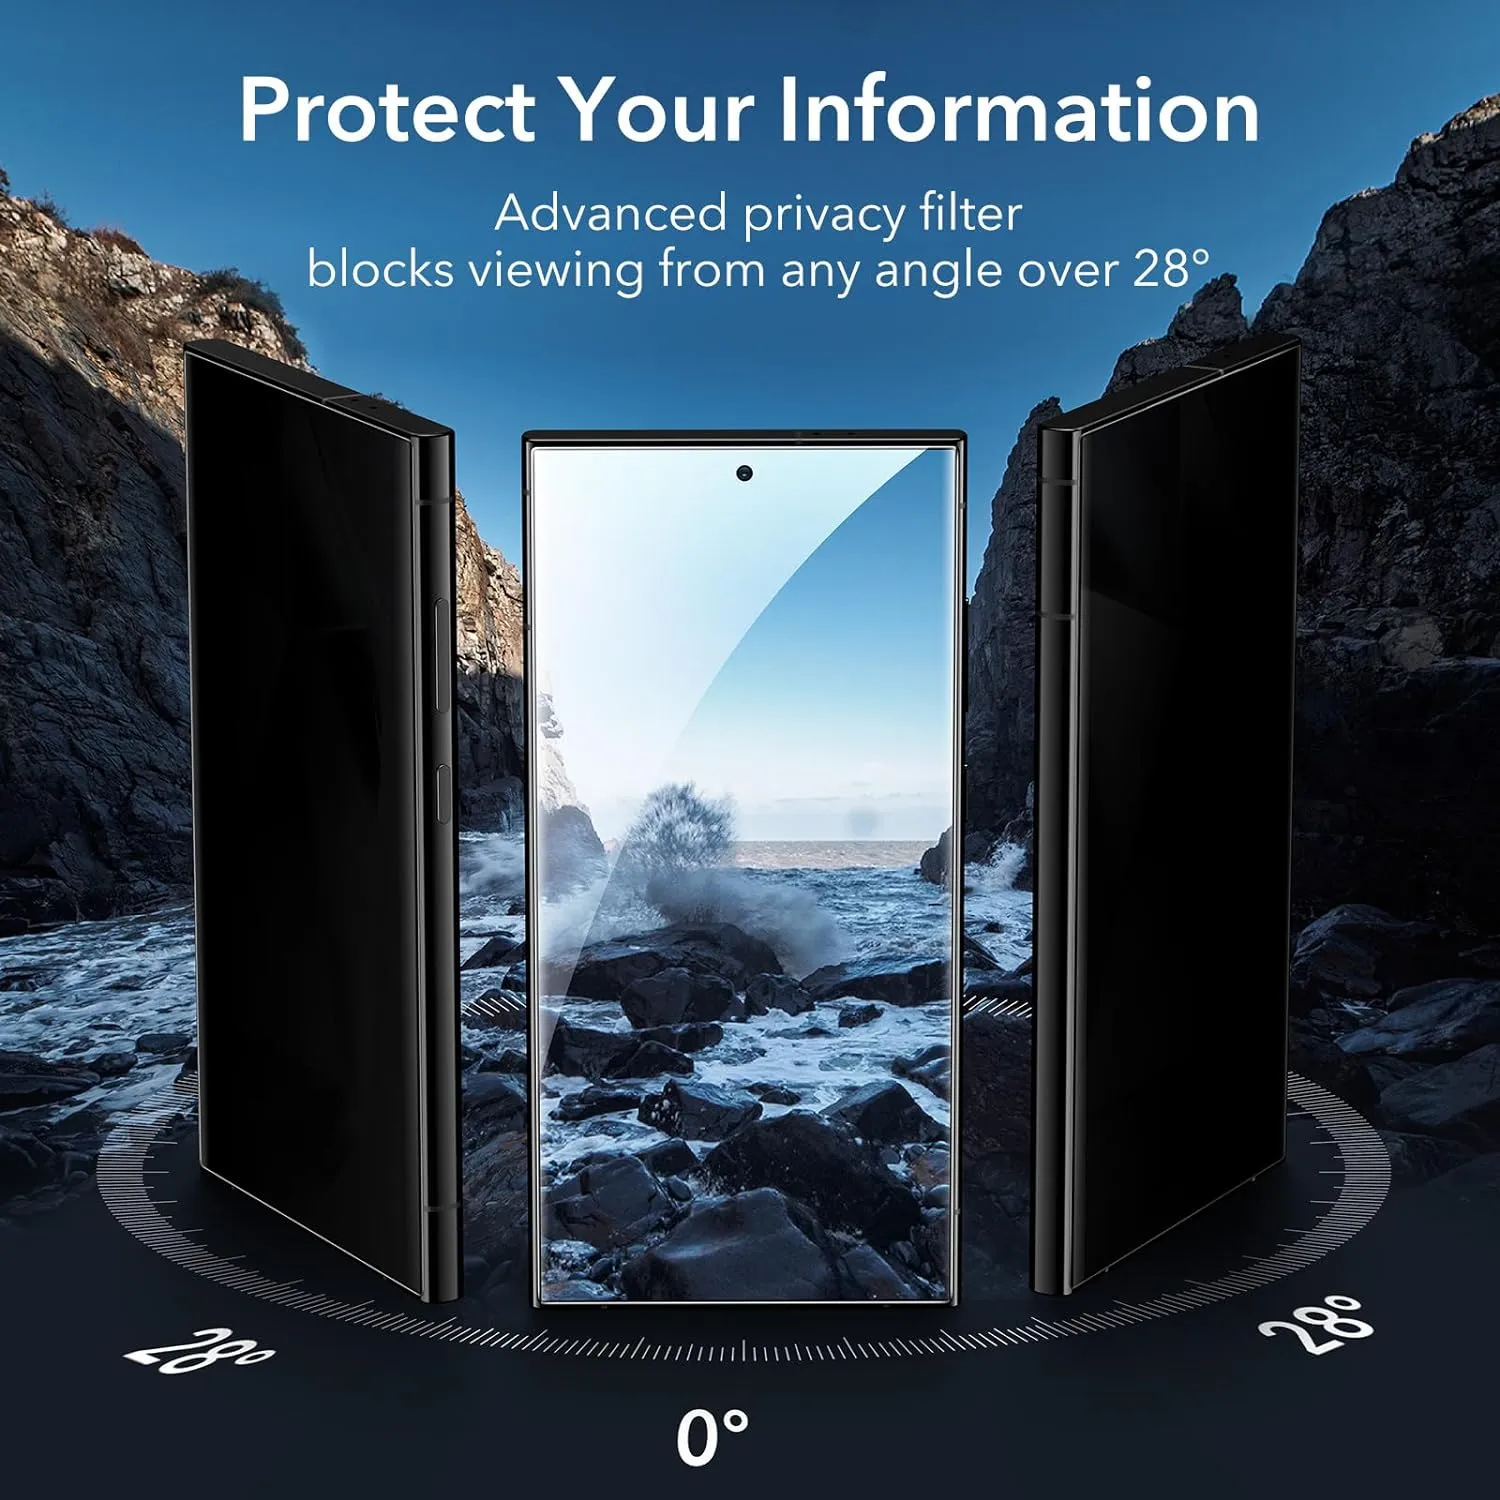 ESR Anti Spy Tempered-Glass Privacy Screen Protector for Galaxy S24 Ultra